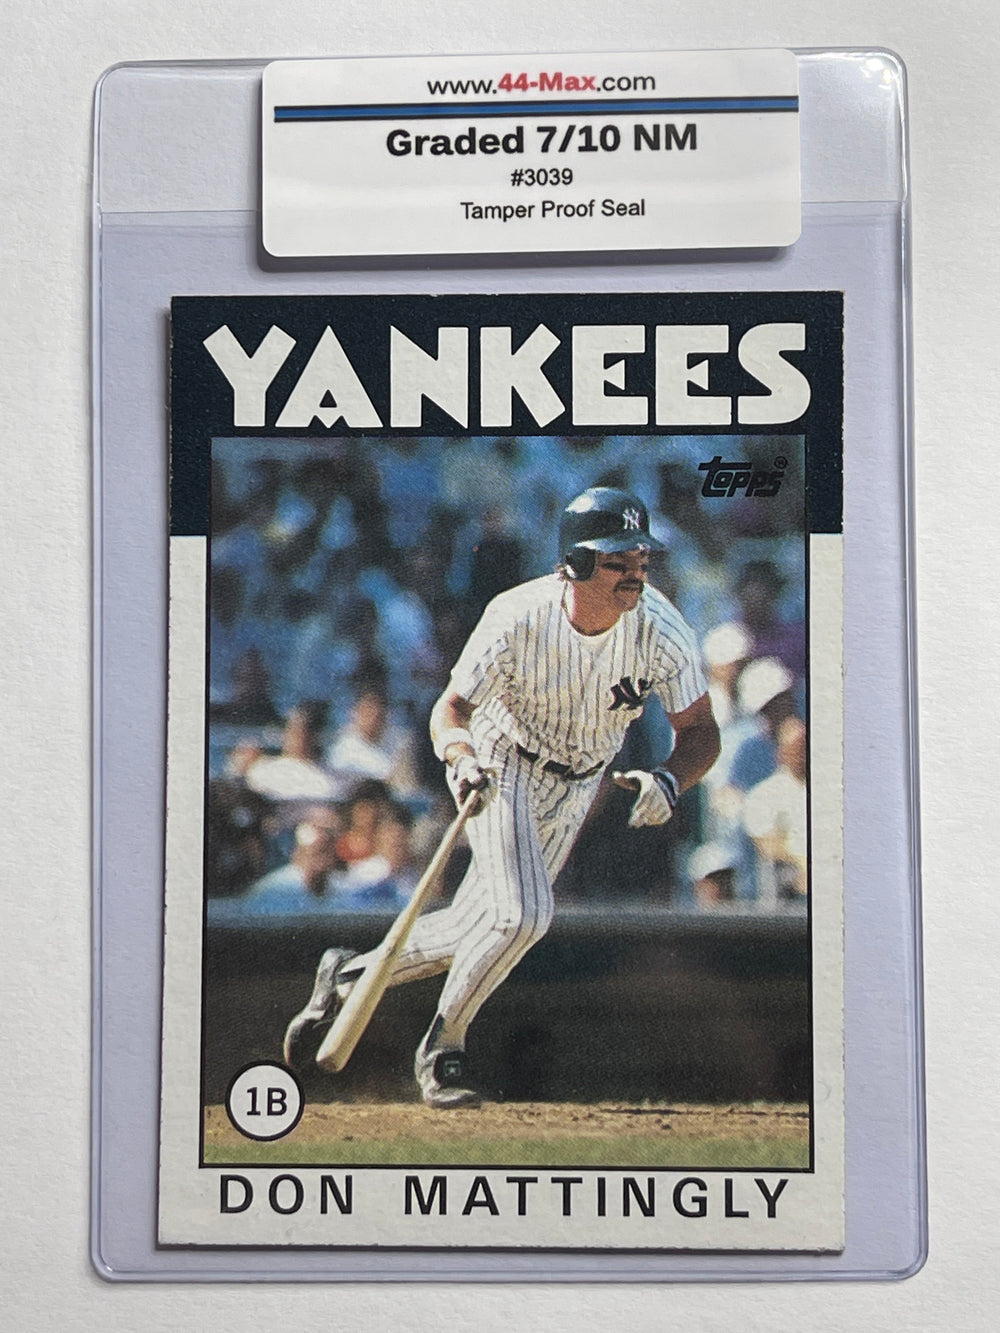 Don Mattingly 1986 Topps Baseball Card. 44-Max 7/10 NM #3039